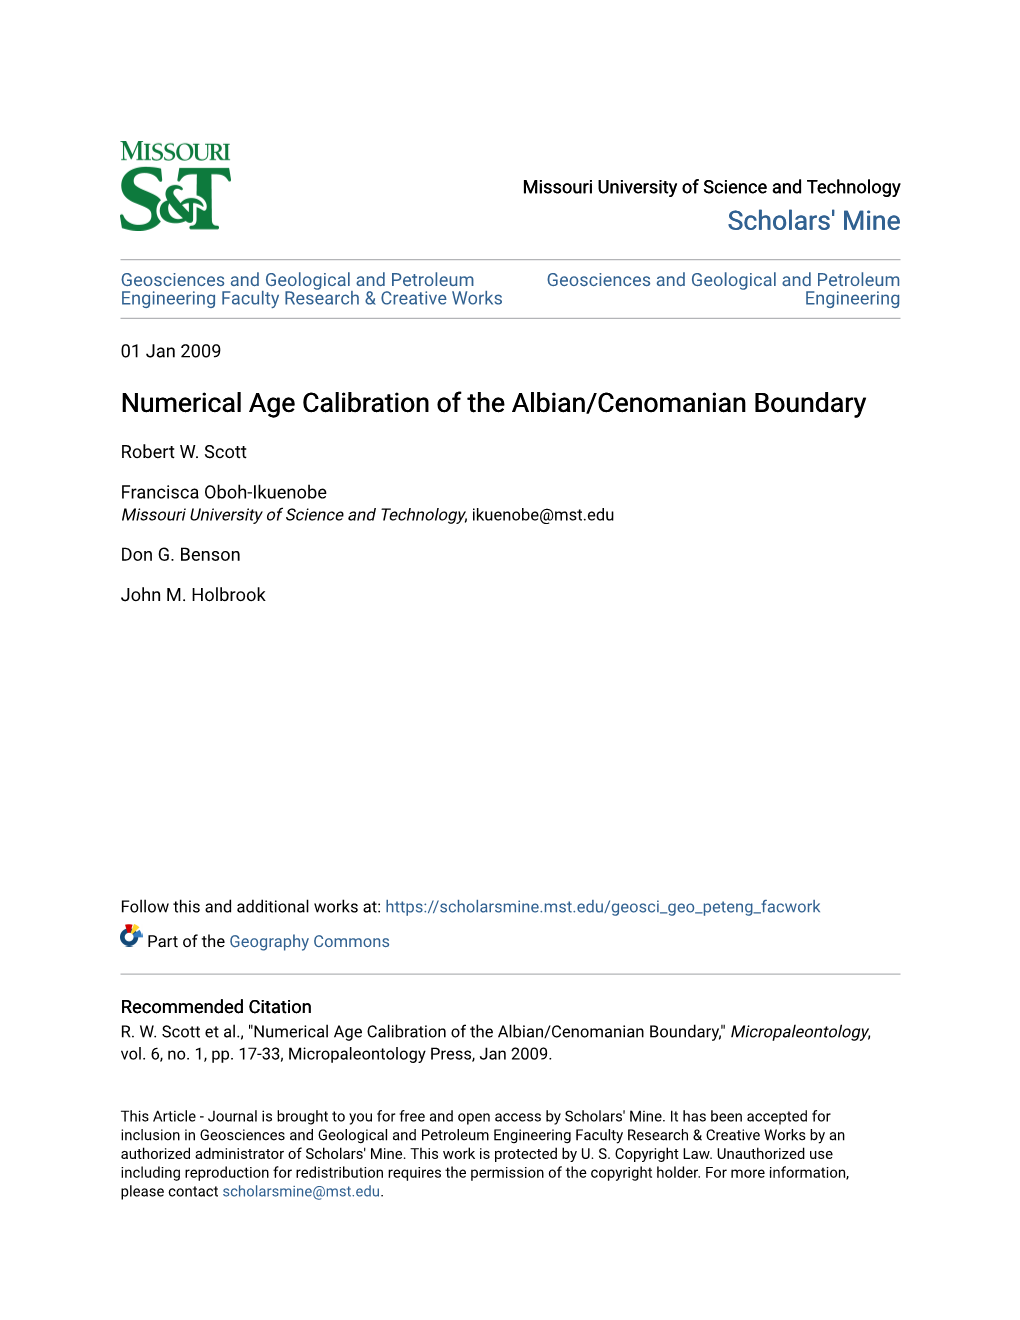 Numerical Age Calibration of the Albian/Cenomanian Boundary